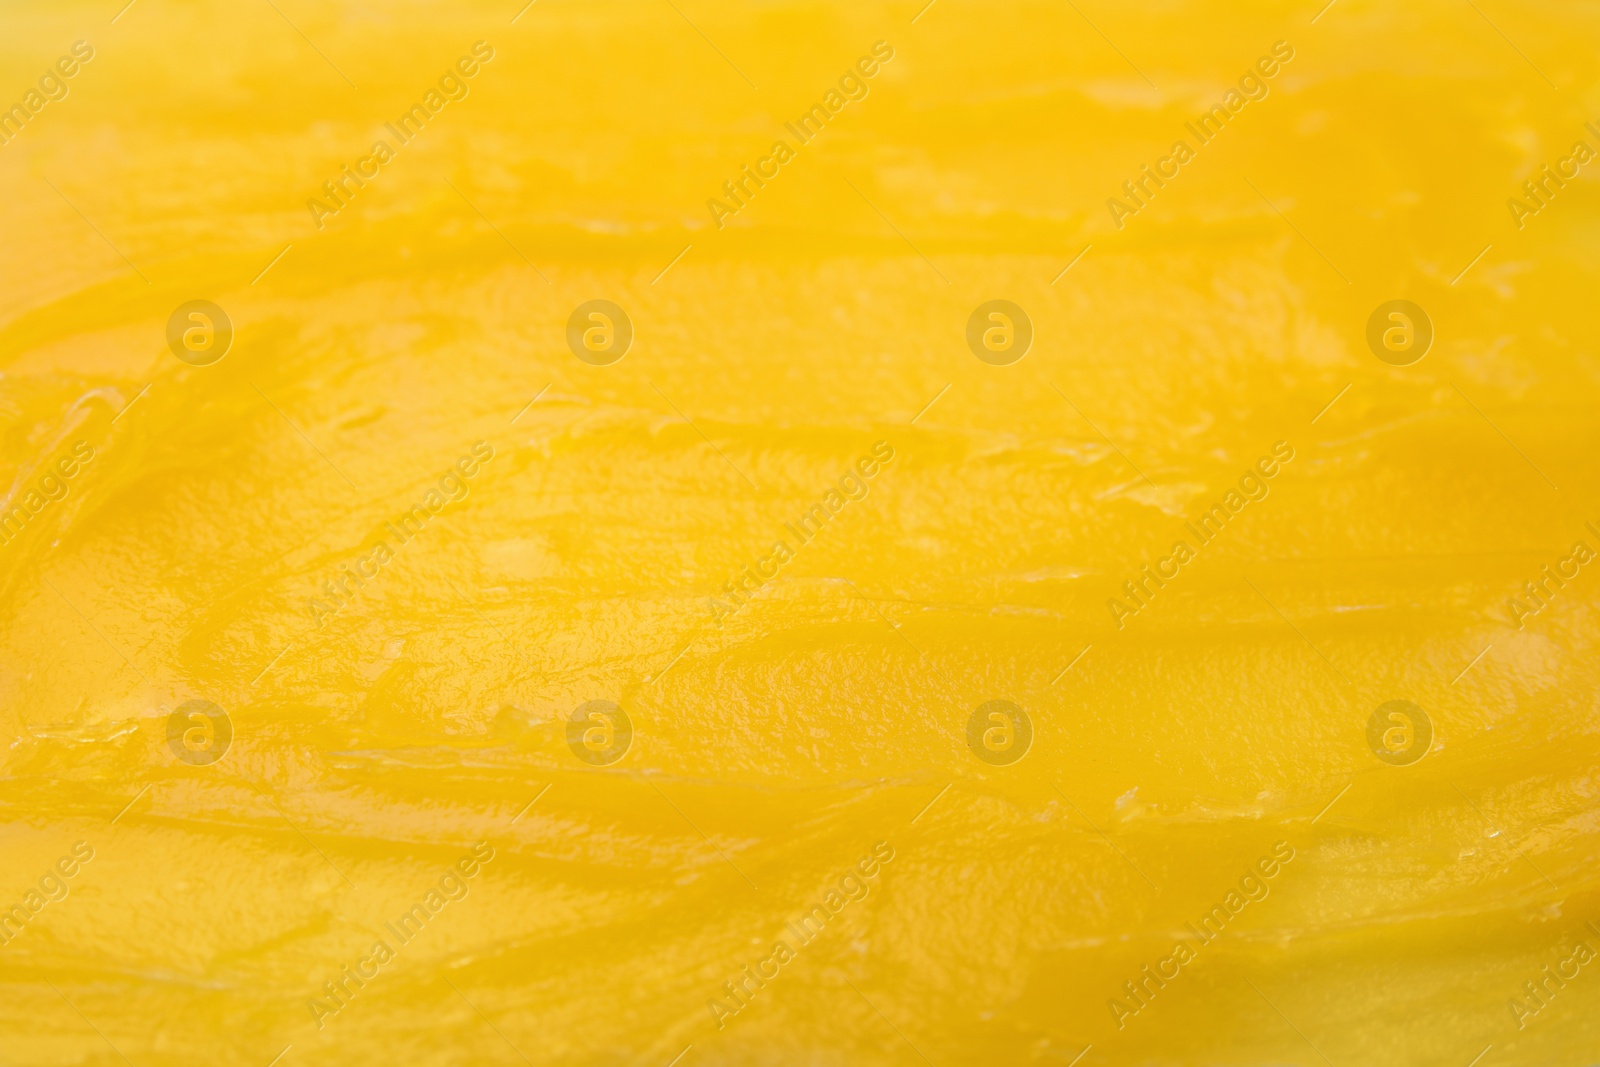 Photo of Yellow cosmetic petrolatum as background, closeup view